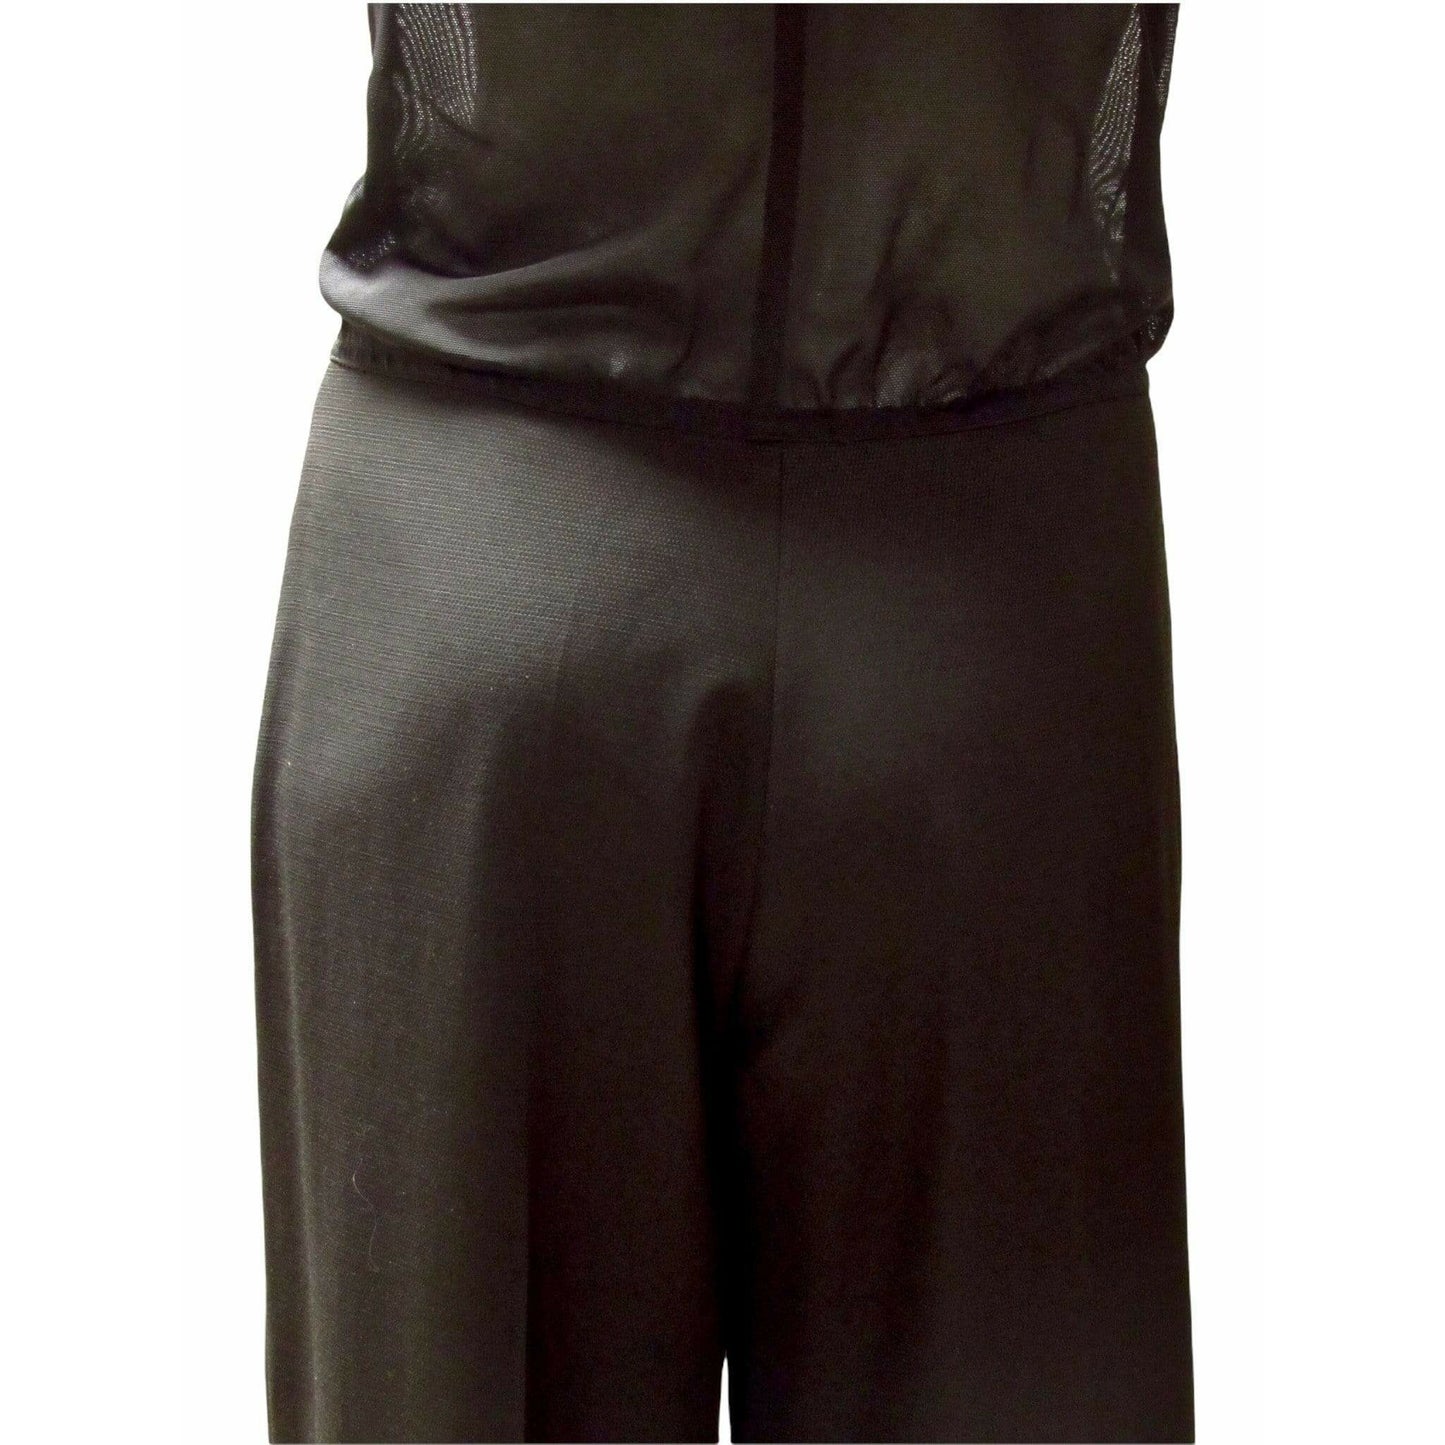 chantal-thomass-zippered-black-jumpsuit Jumpsuits & Rompers Black